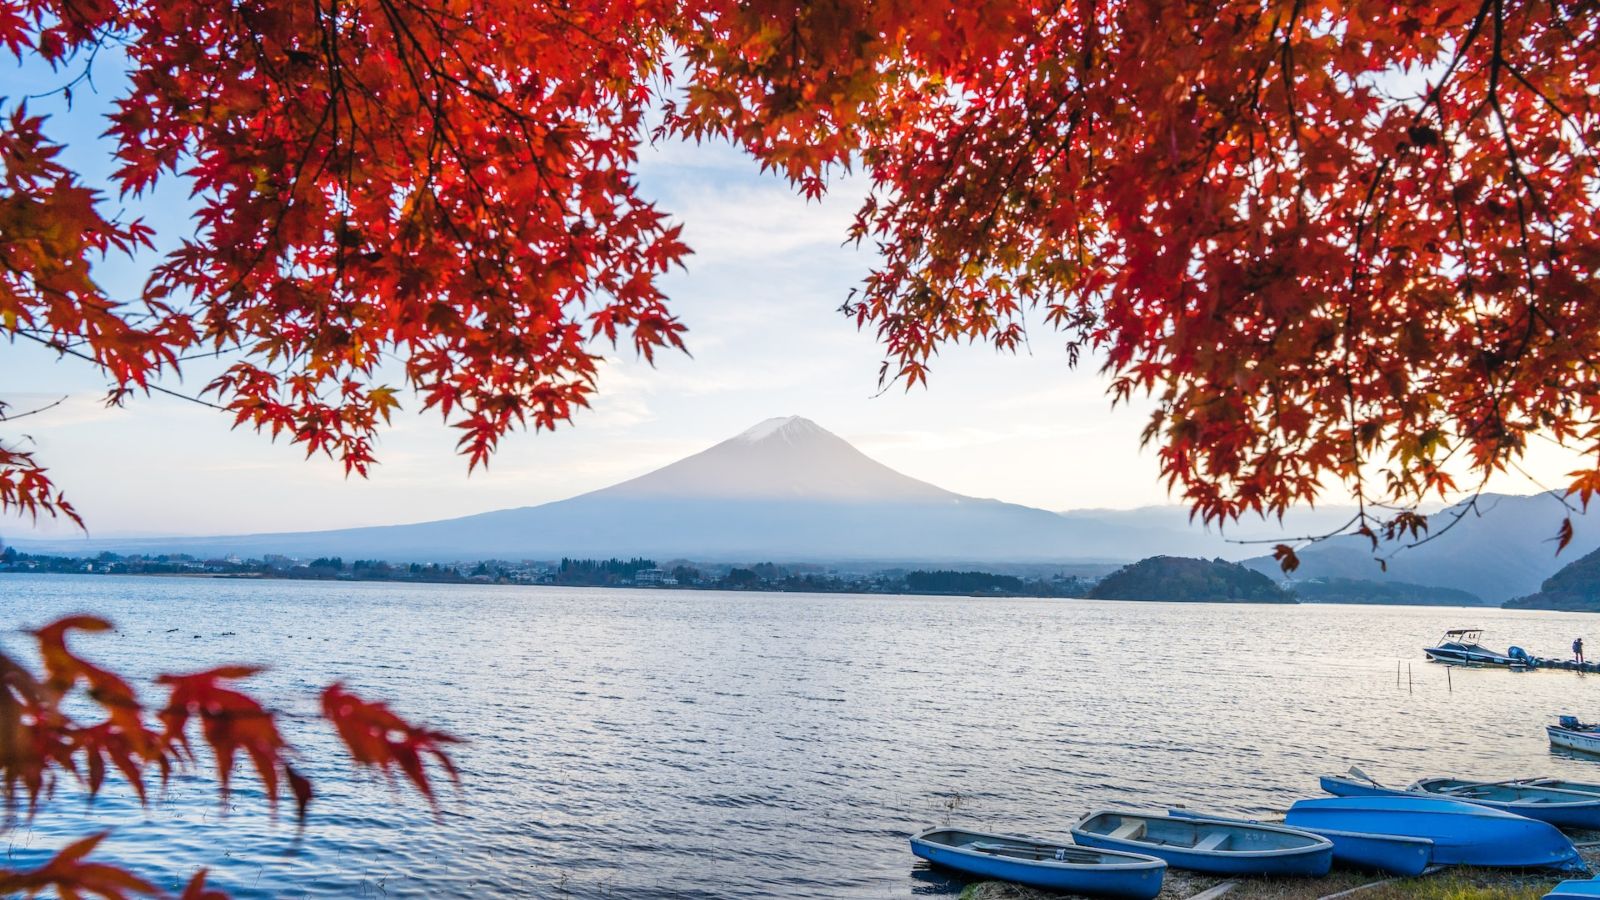 Mt. Fuji during autumn in Japan - Point Hacks